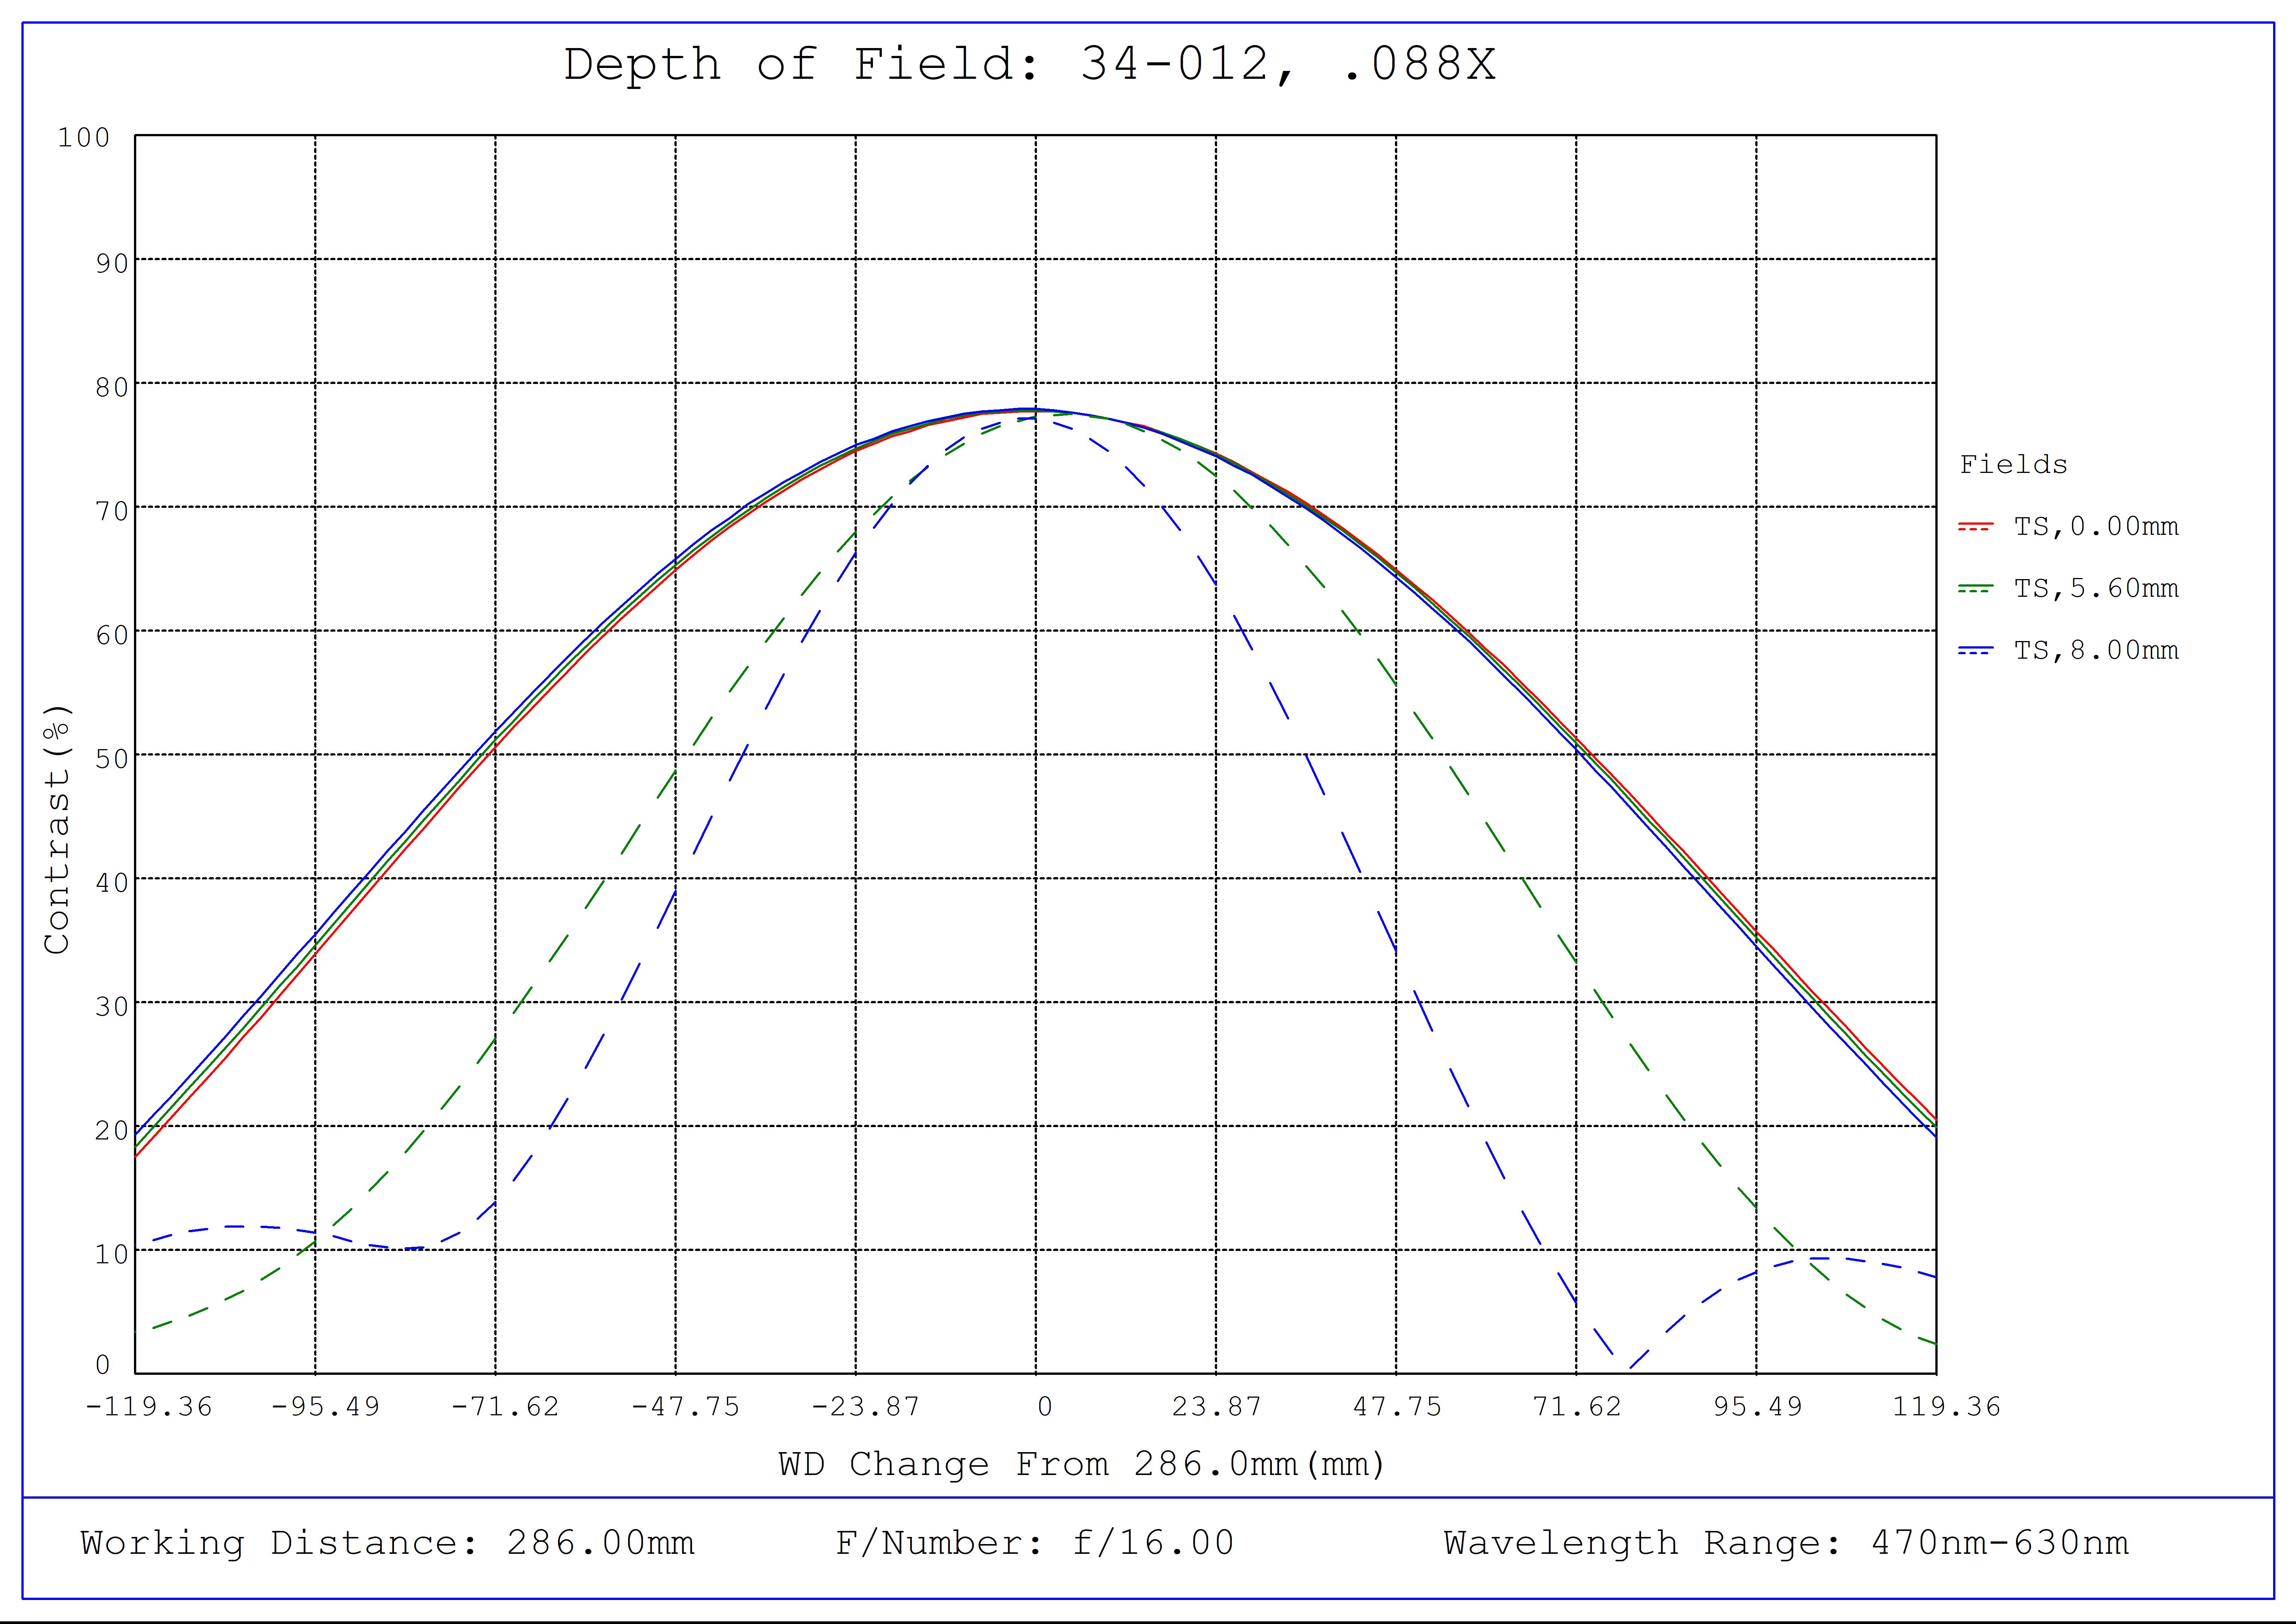 #34-012, 0.088X, 1" C-Mount TitanTL® Telecentric Lens, Depth of Field Plot, 286mm Working Distance, f16